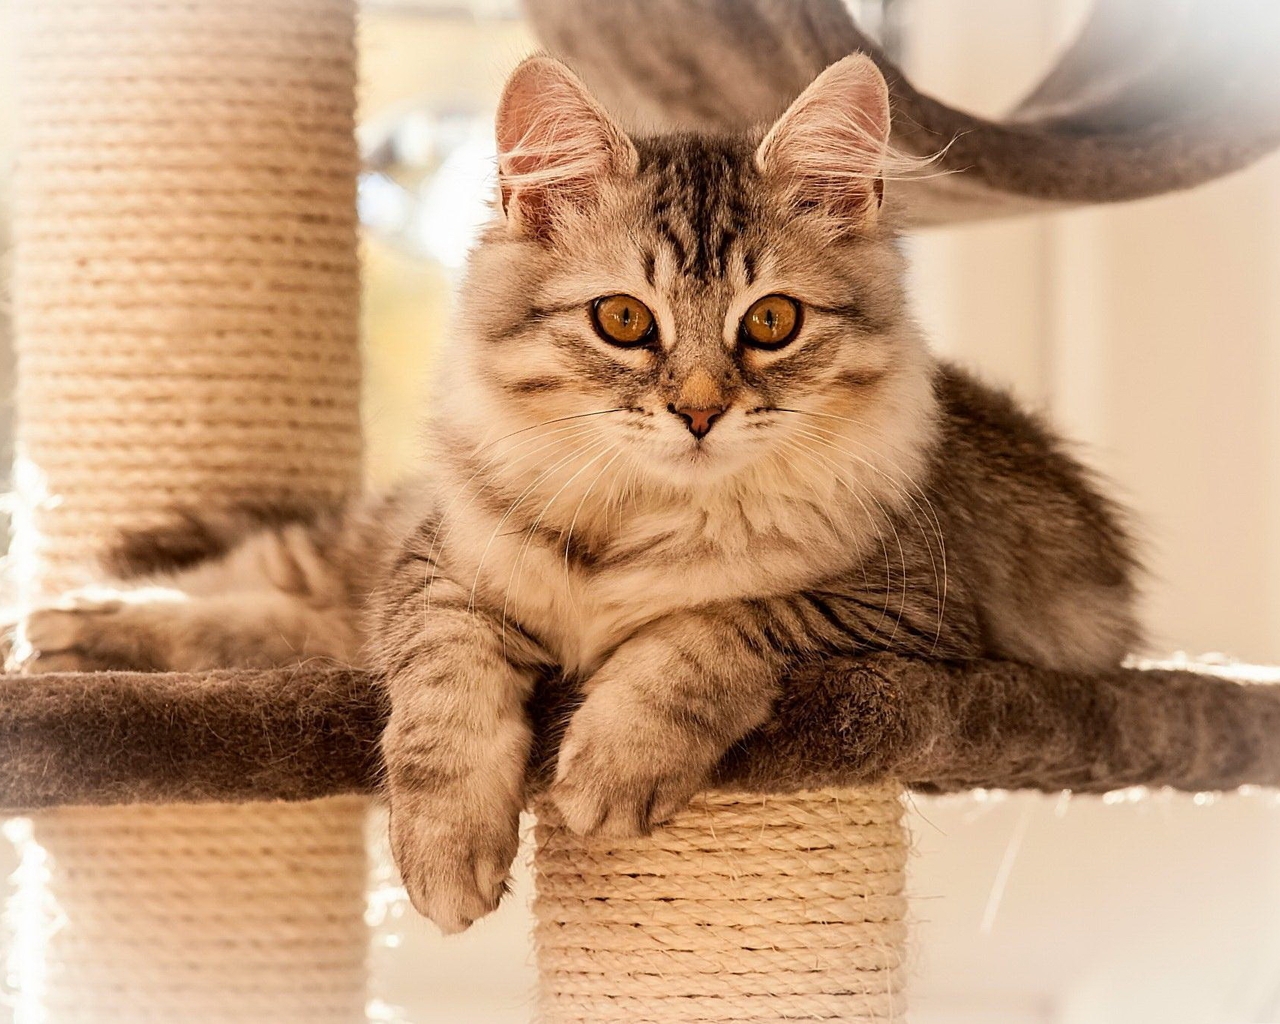 Image: Cat, fluffy, beautiful, cute, lying, scratching post